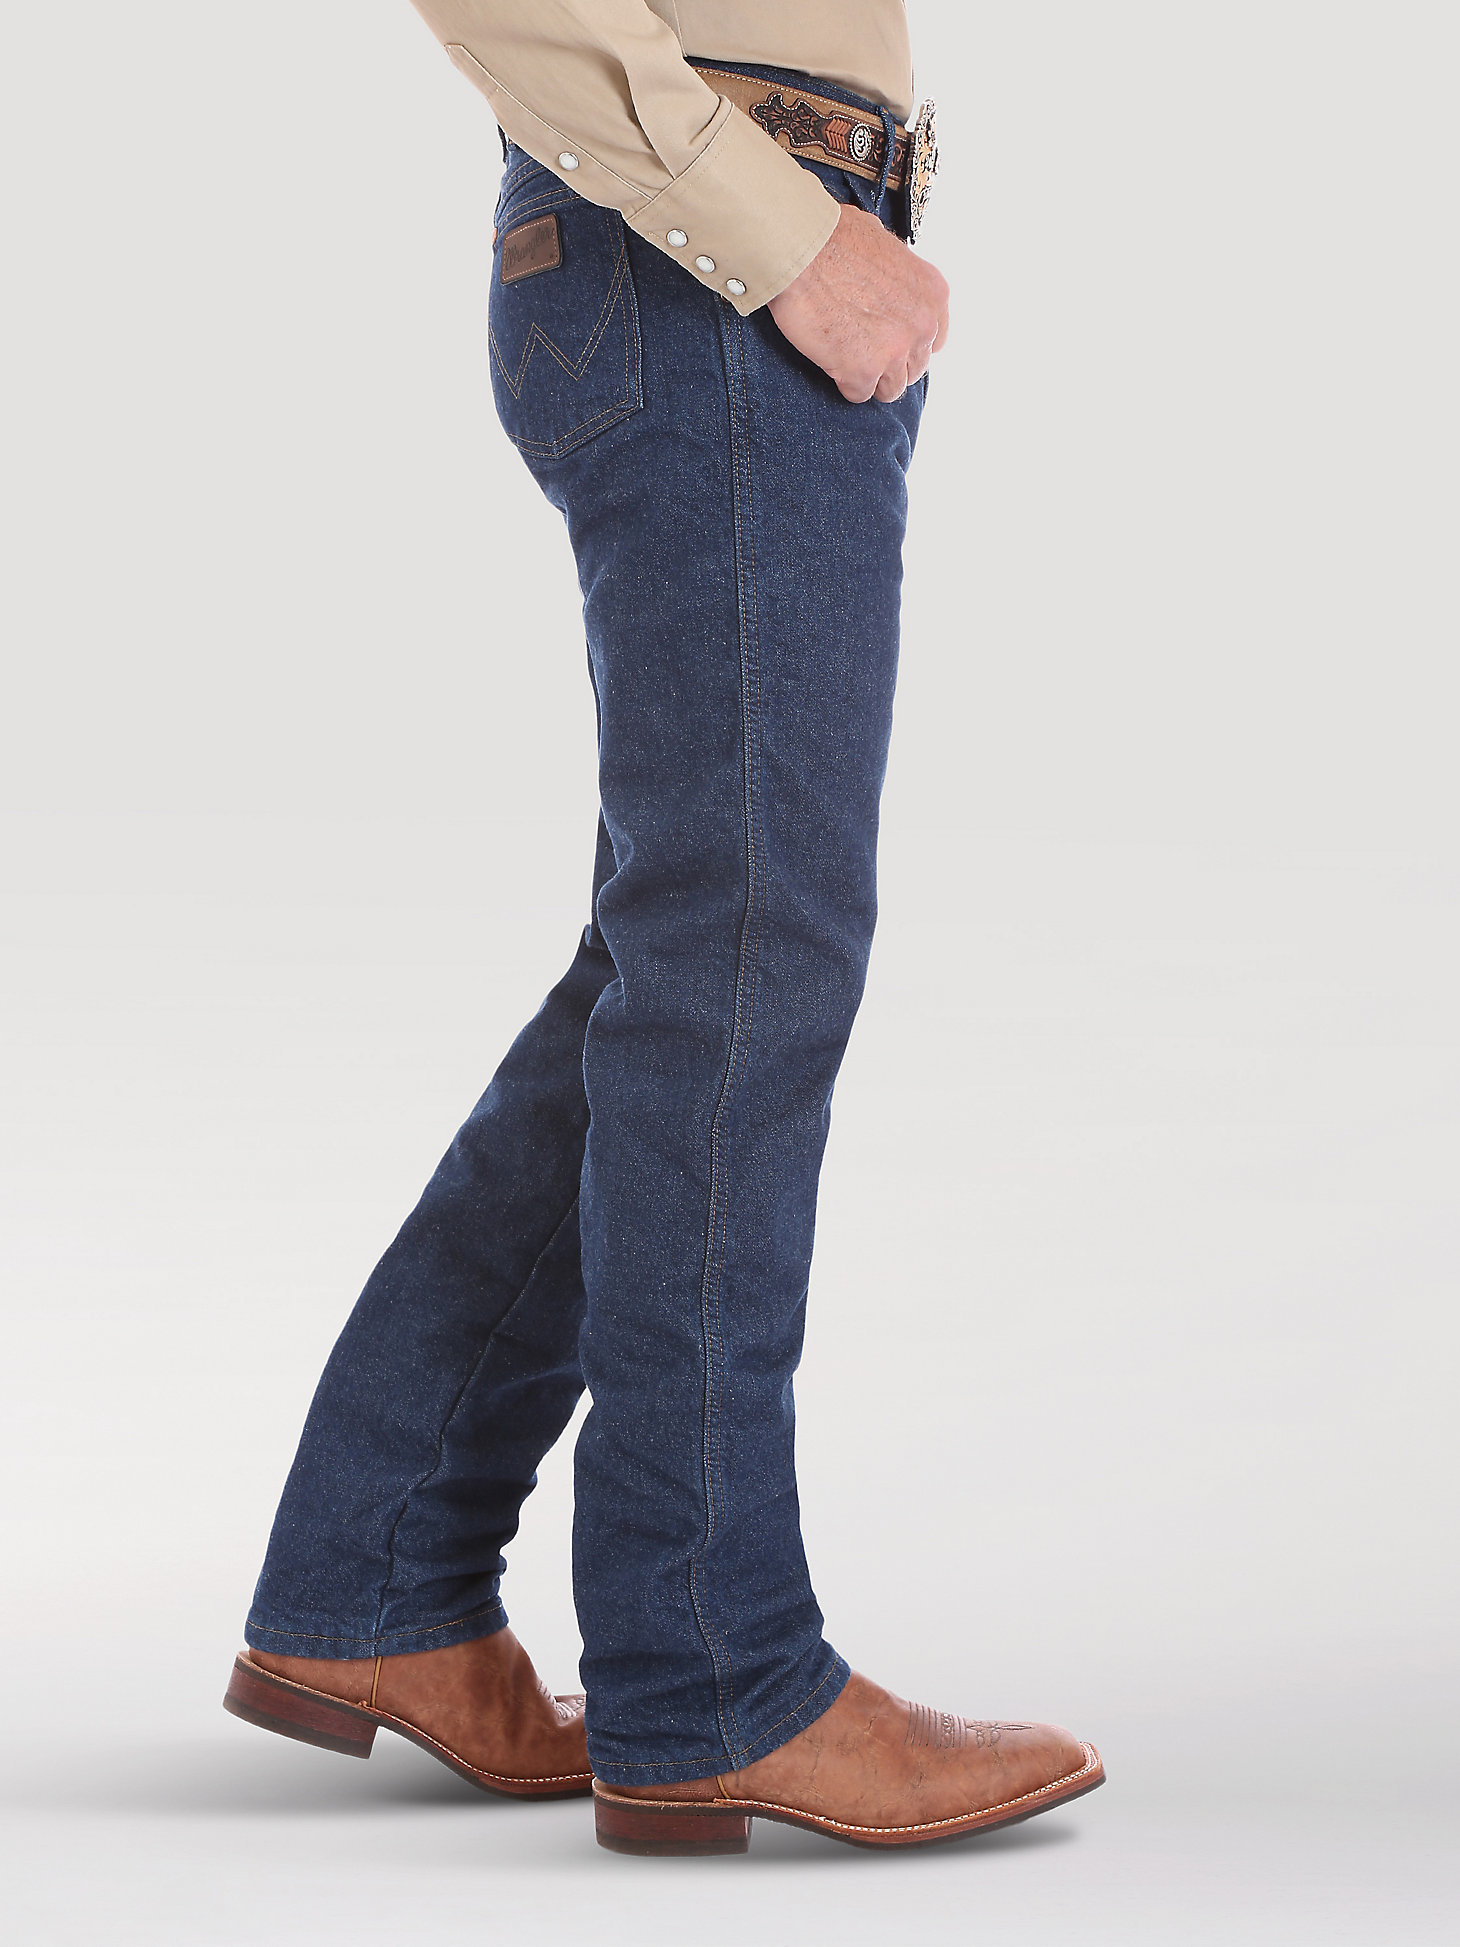 Premium Performance Cowboy Cut® Regular Fit Jean - Flannel Lined in Stonewash alternative view 2